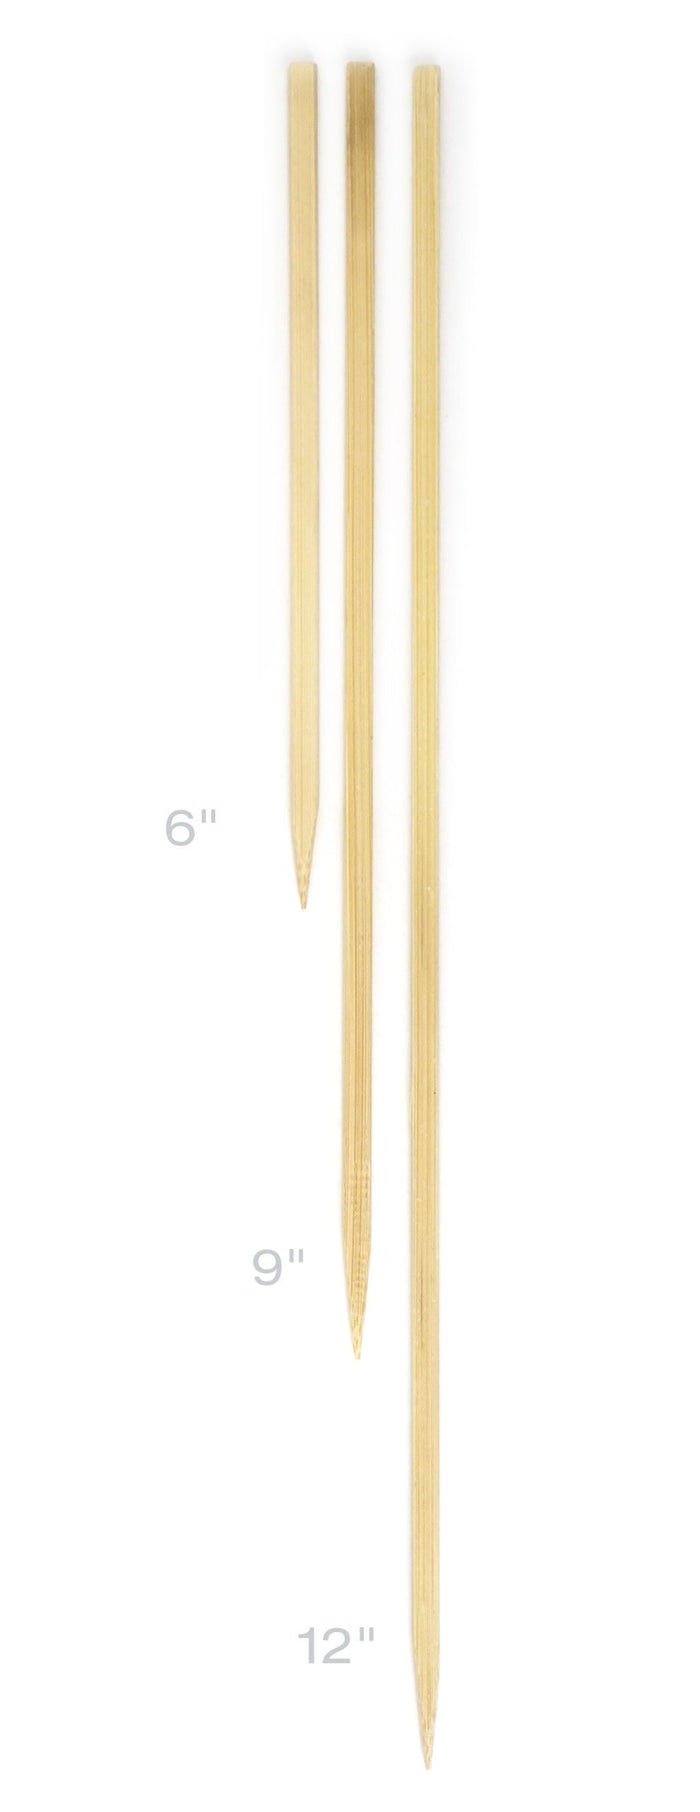 RSVP Flat Bamboo Skewers,  6"